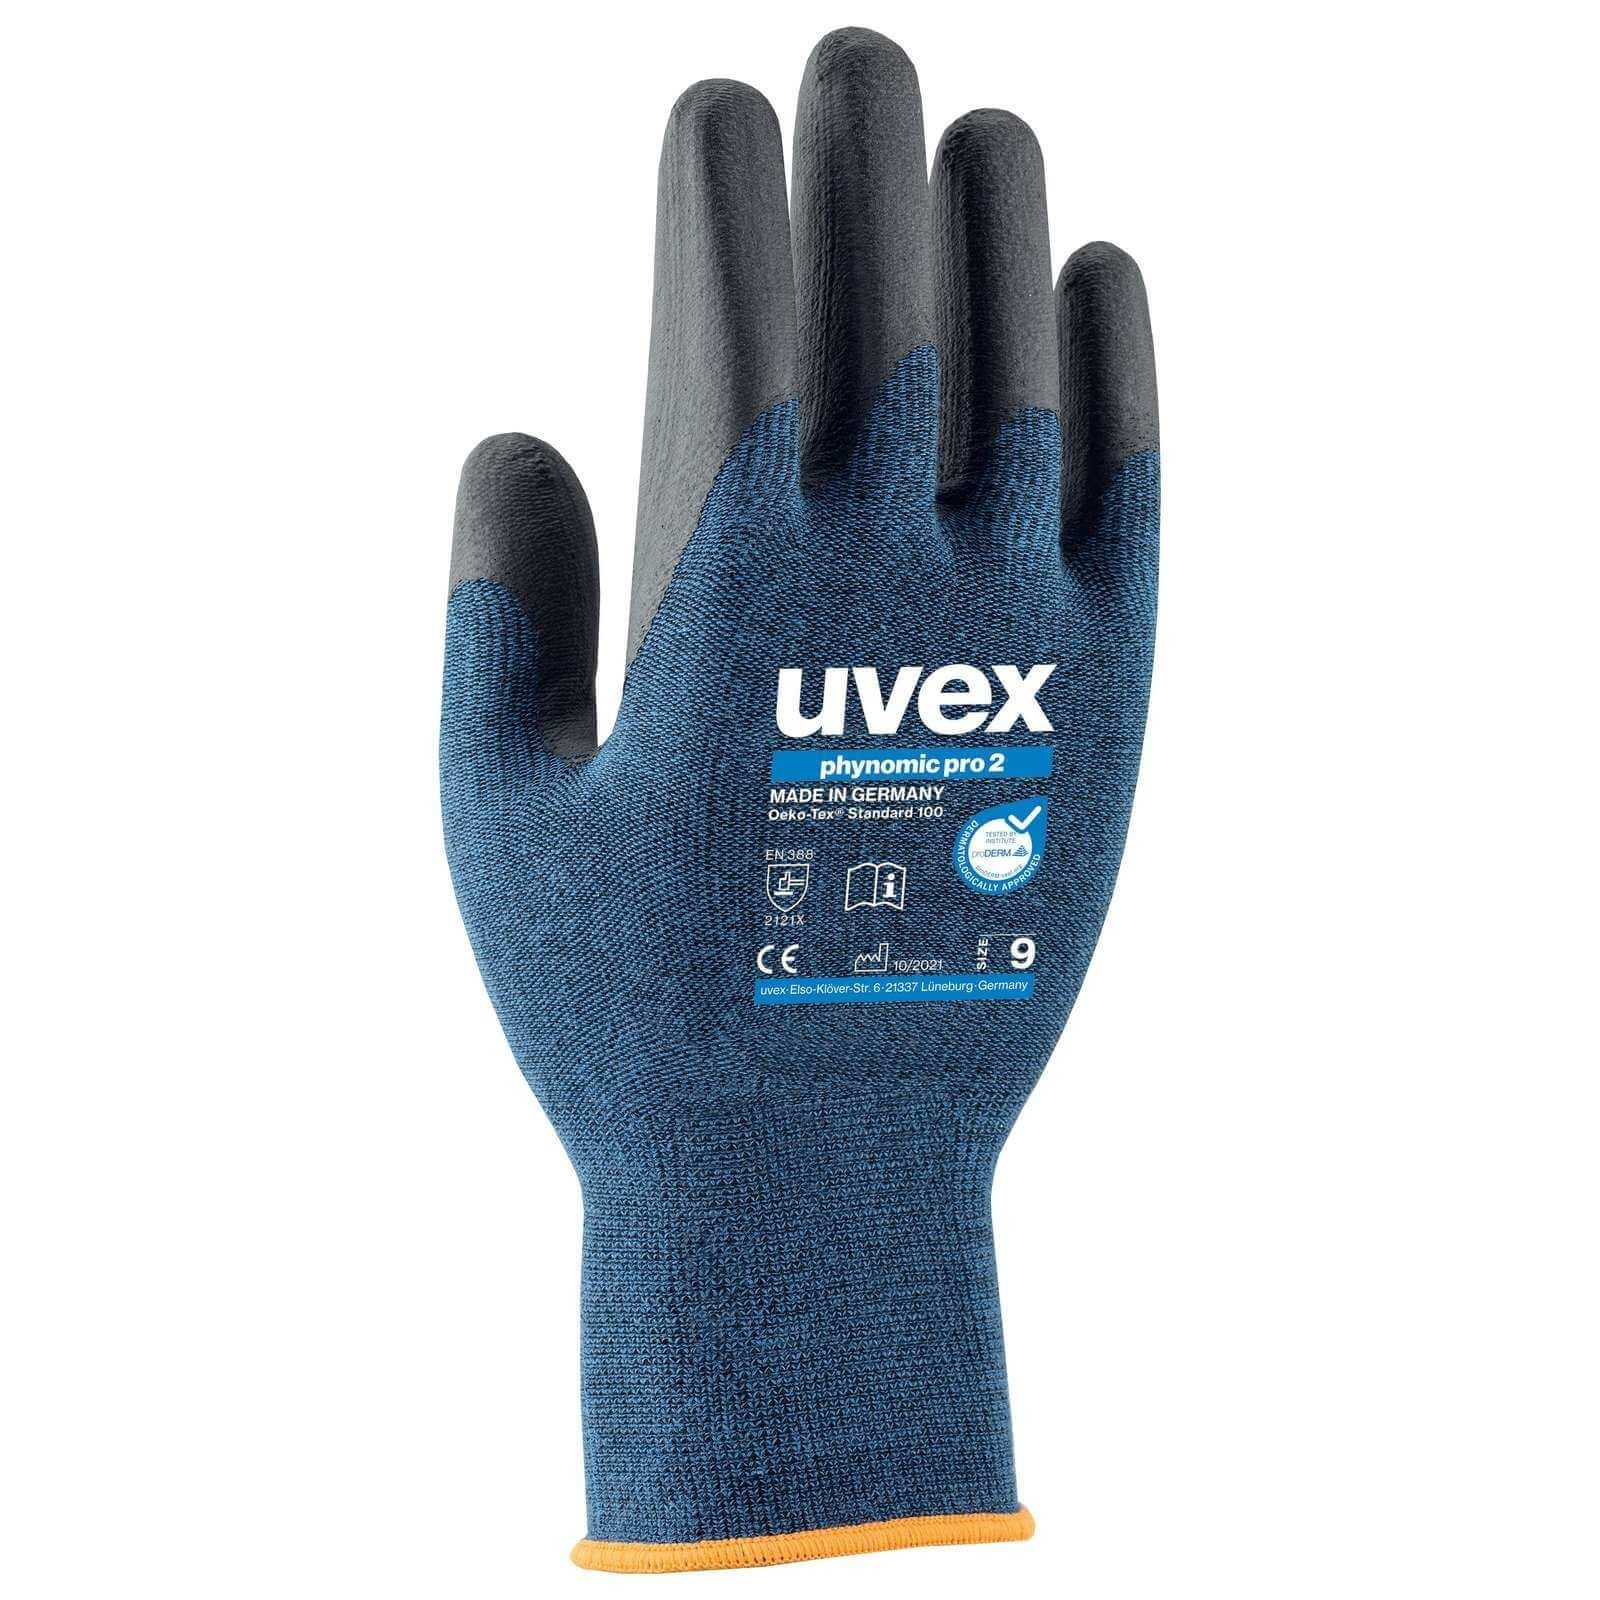 Uvex Mechaniker-Handschuhe uvex Schutzhandschuhe phynomic pro 2 60064,  Handschuh aus Bambusfasern (Spar-Set), Teilbeschichtung: Aqua-Polymer-Pro